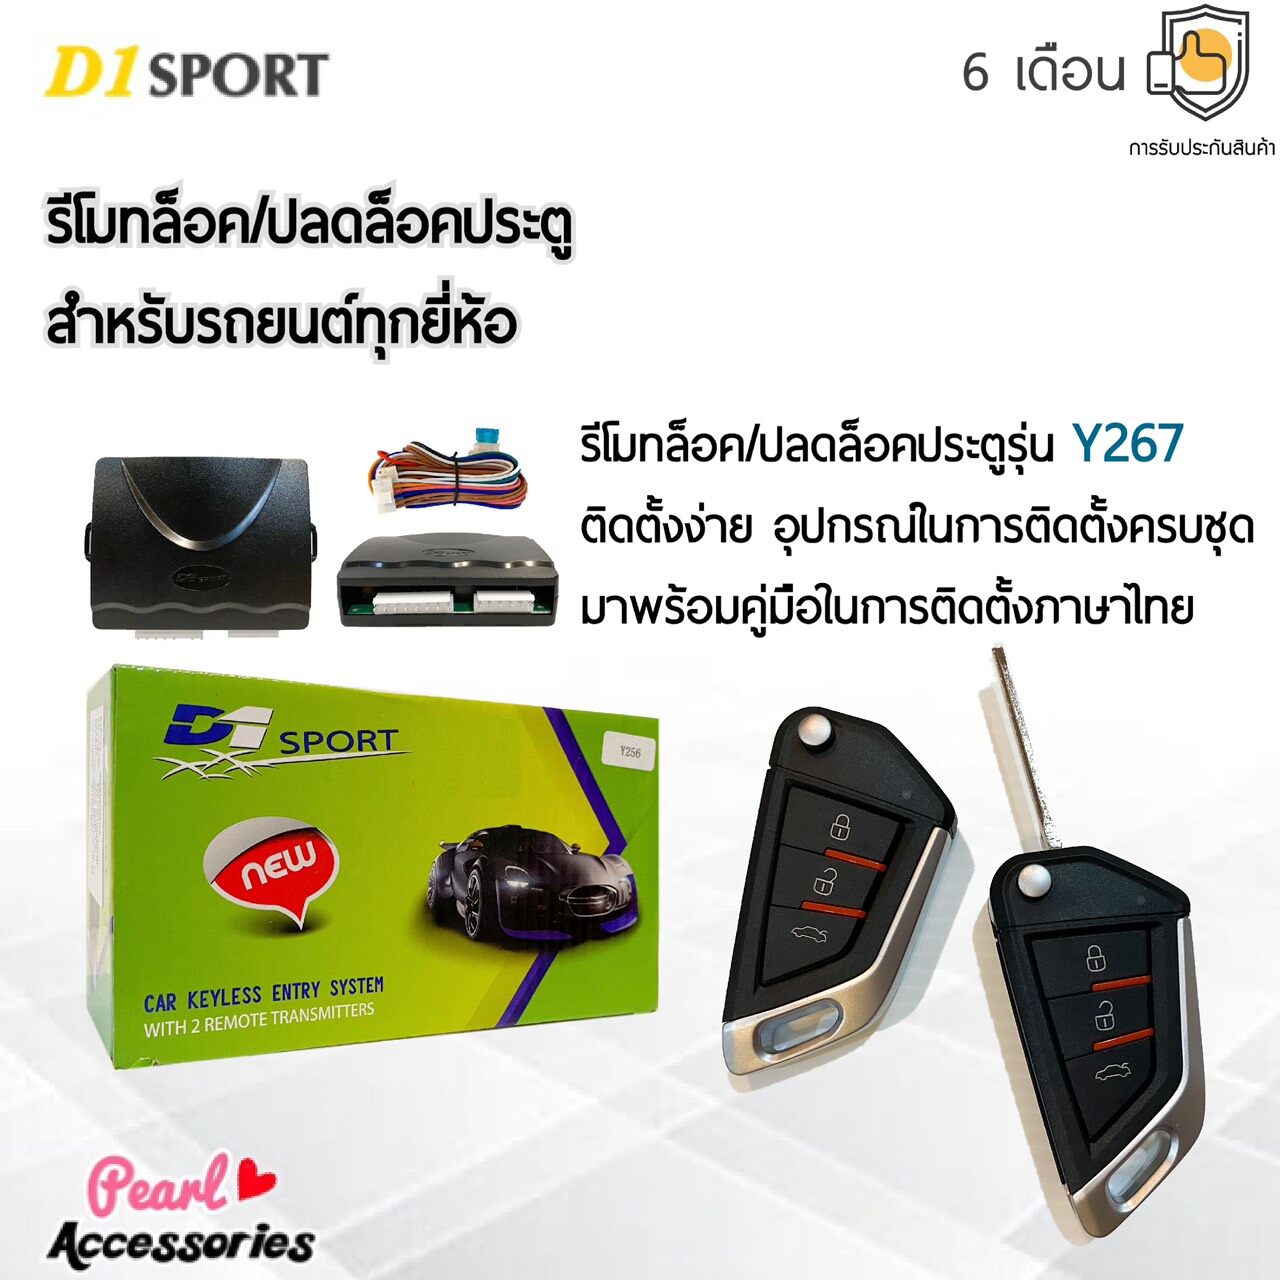 D1 Sport รีโมทล็อค/ปลดล็อคประตูรถยนต์ Y267 สำหรับรถยนต์ทุกยี่ห้อ อุปกรณ์ในการติดตั้งครบชุด (คู่มือในการติดตั้งภาษาไทย) Car keyless entry system